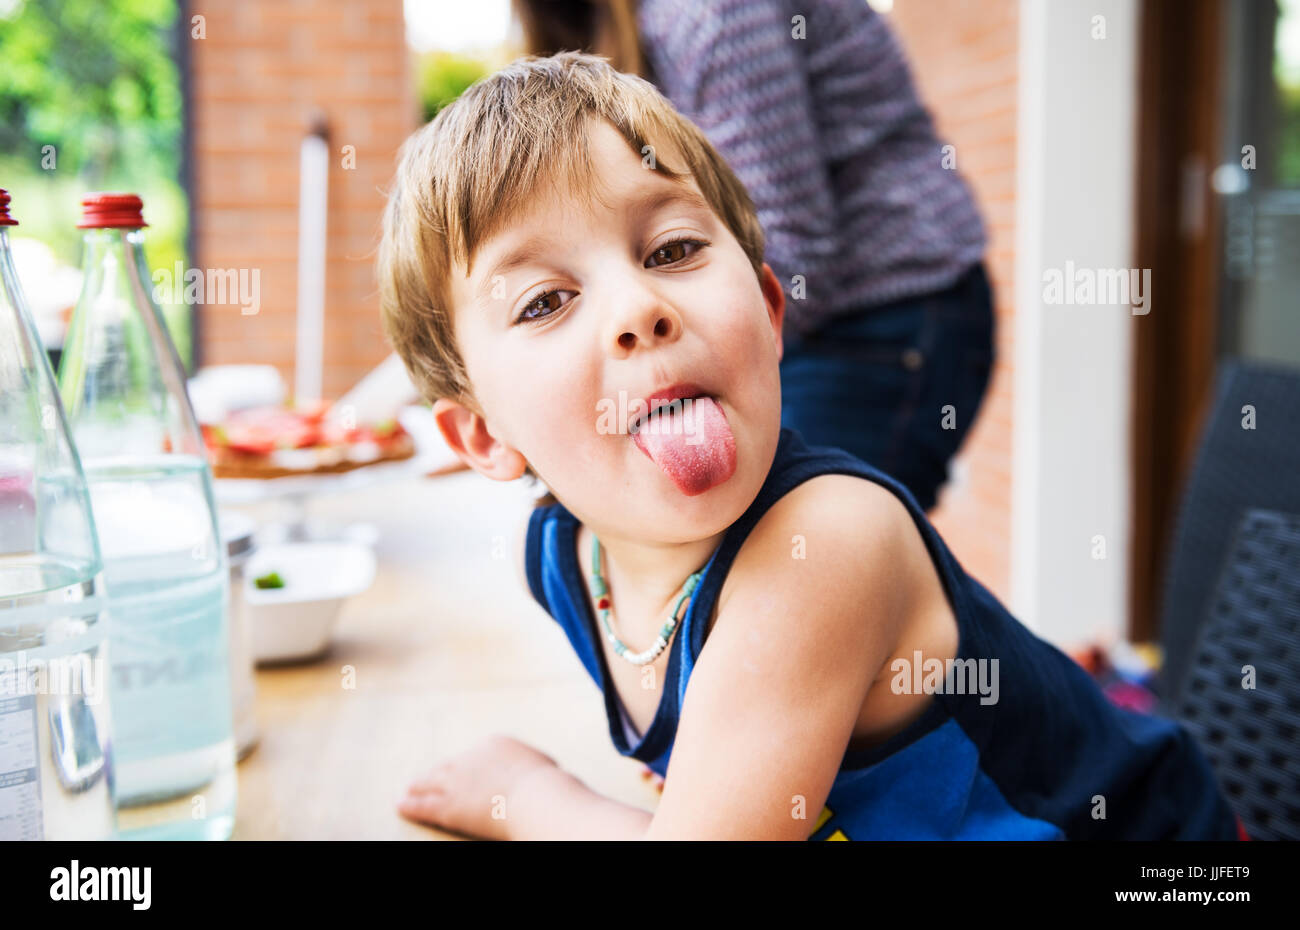 Child making a tongue Stock Photo